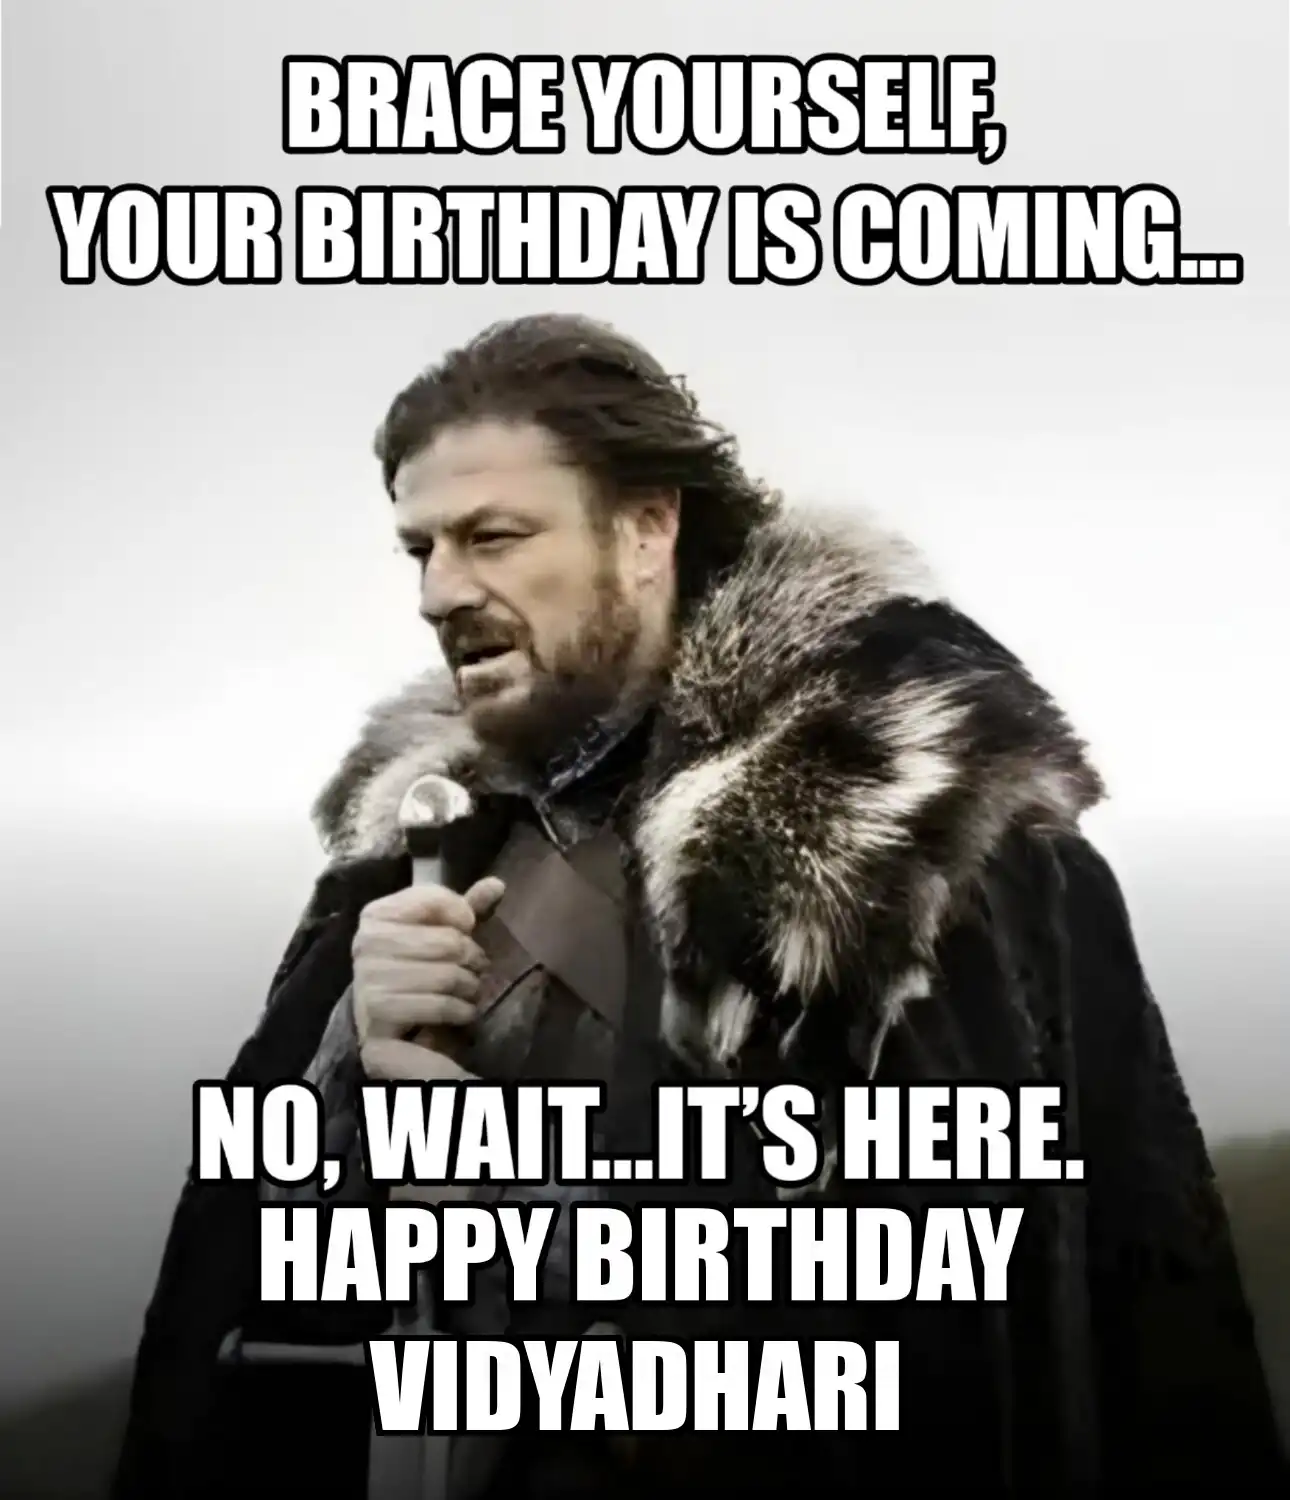 Happy Birthday Vidyadhari Brace Yourself Your Birthday Is Coming Meme